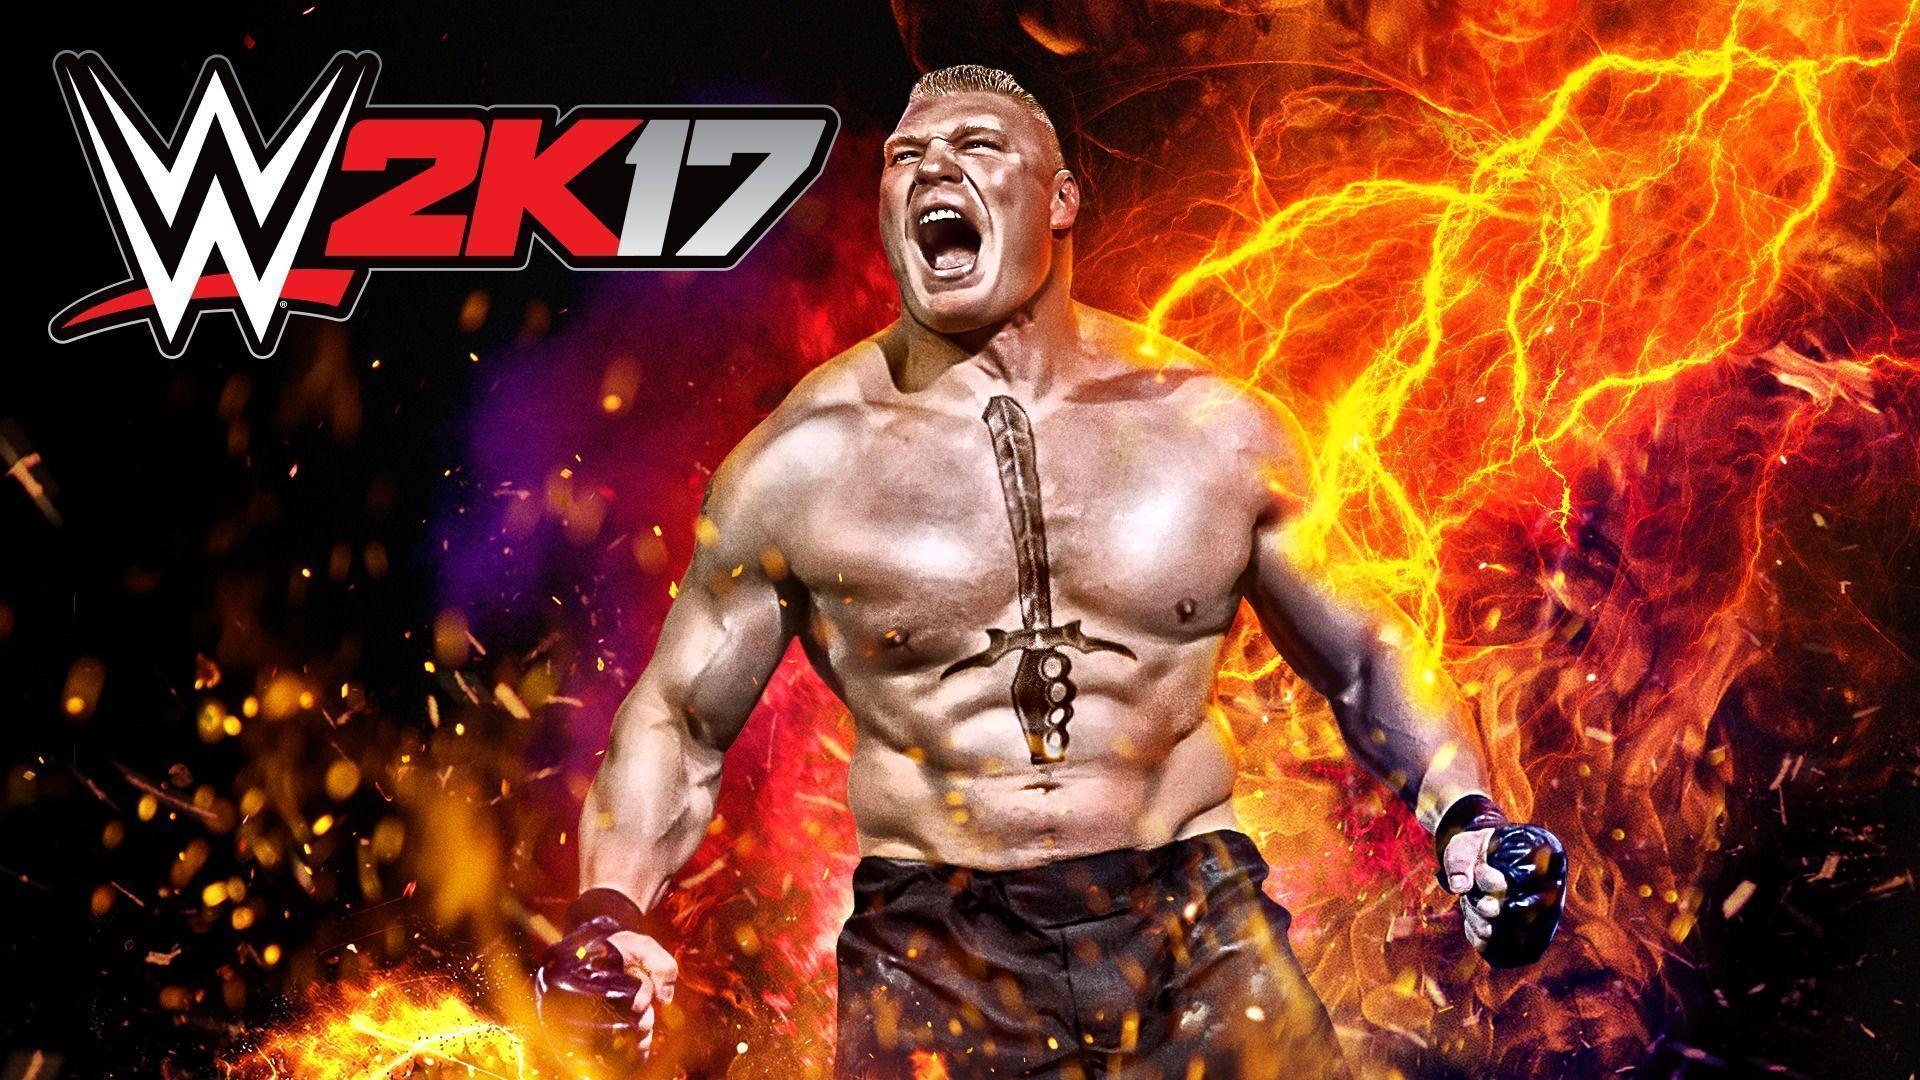 WWE 2K17: DIGITAL DELUXE EDITION